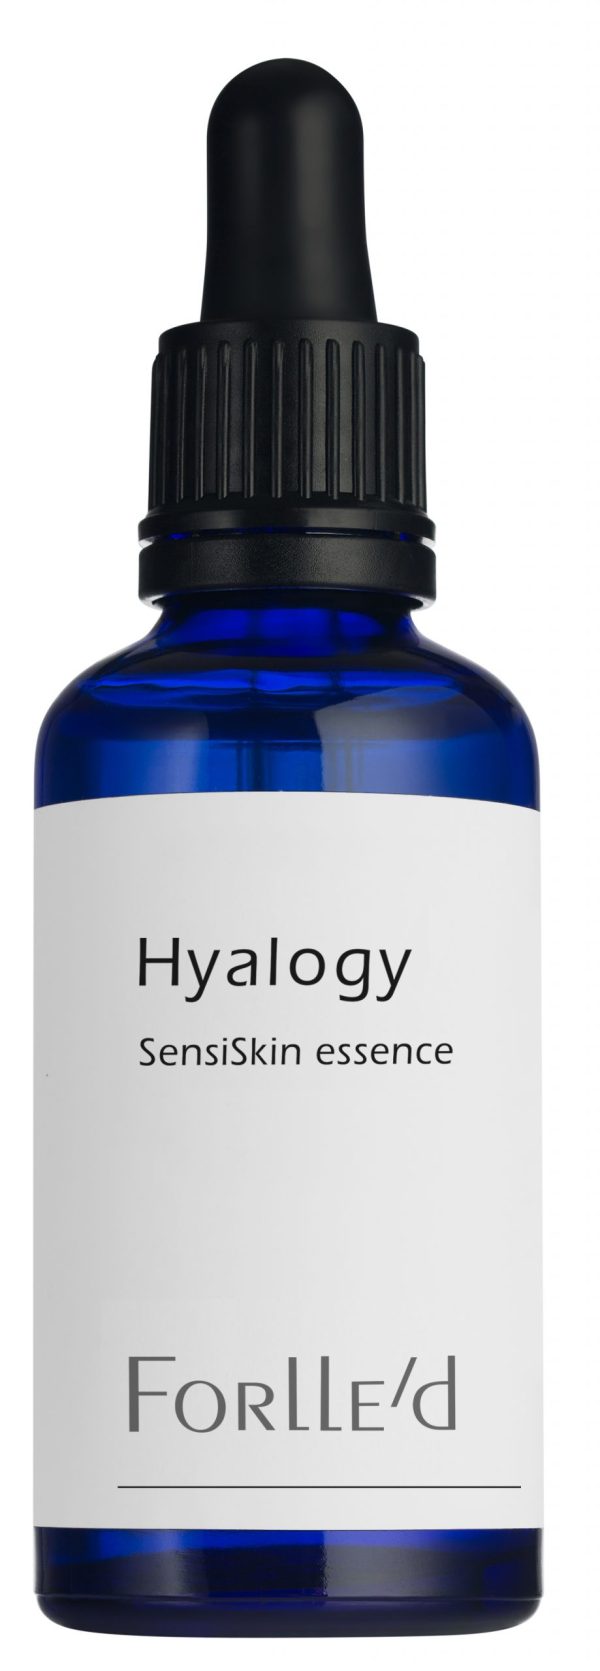 Hyalogy SensiSkin essence 50ml scaled 1